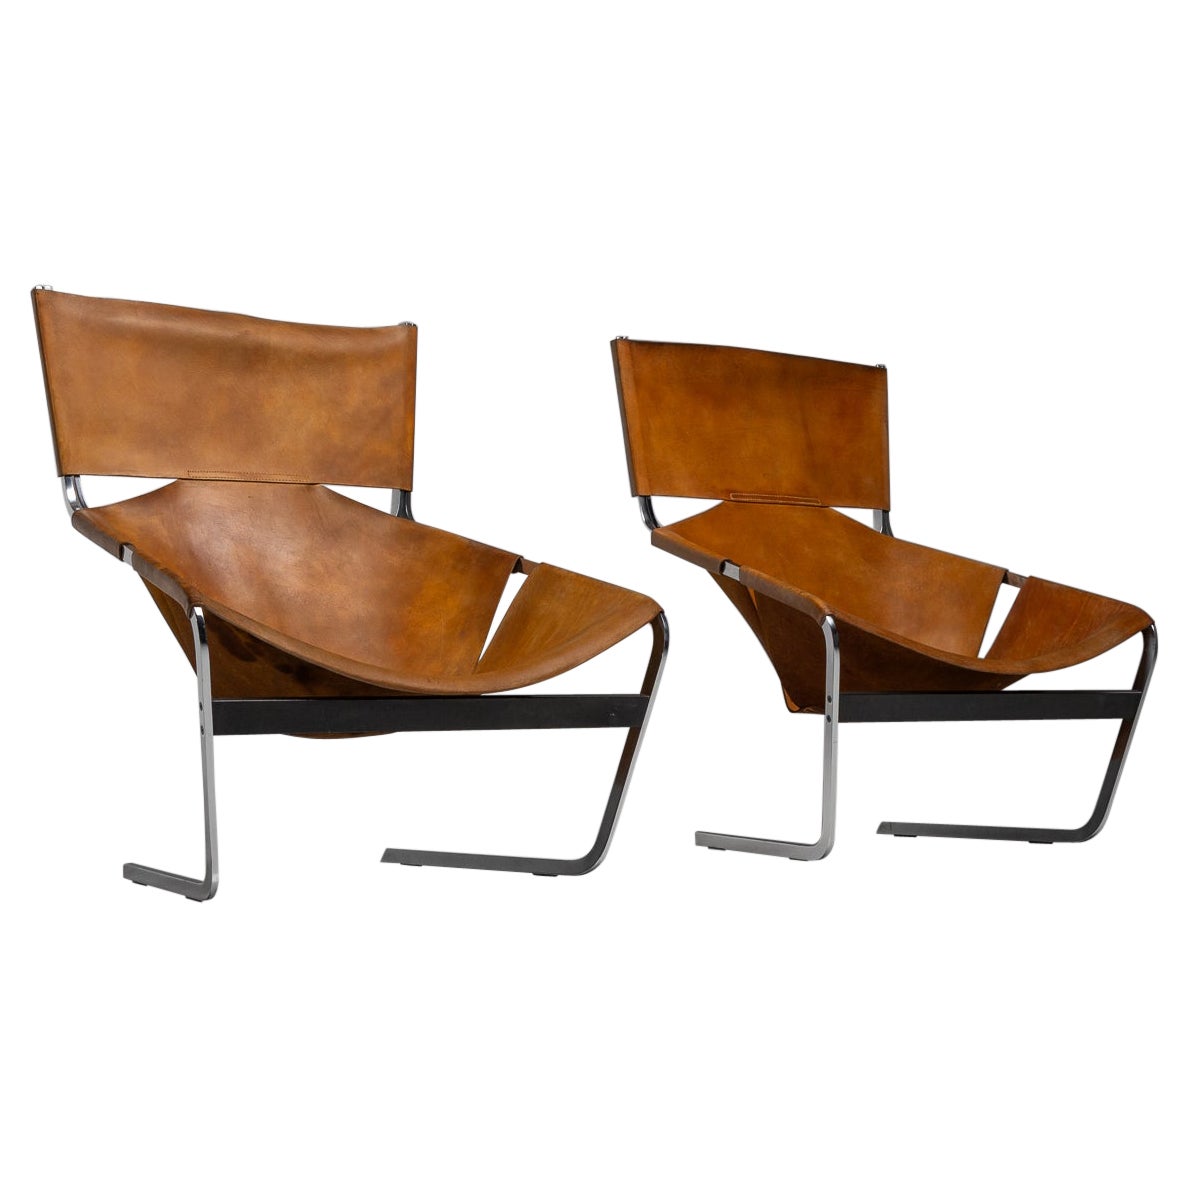 Pierre Paulin F444 lounge chairs pair Artifort 1963